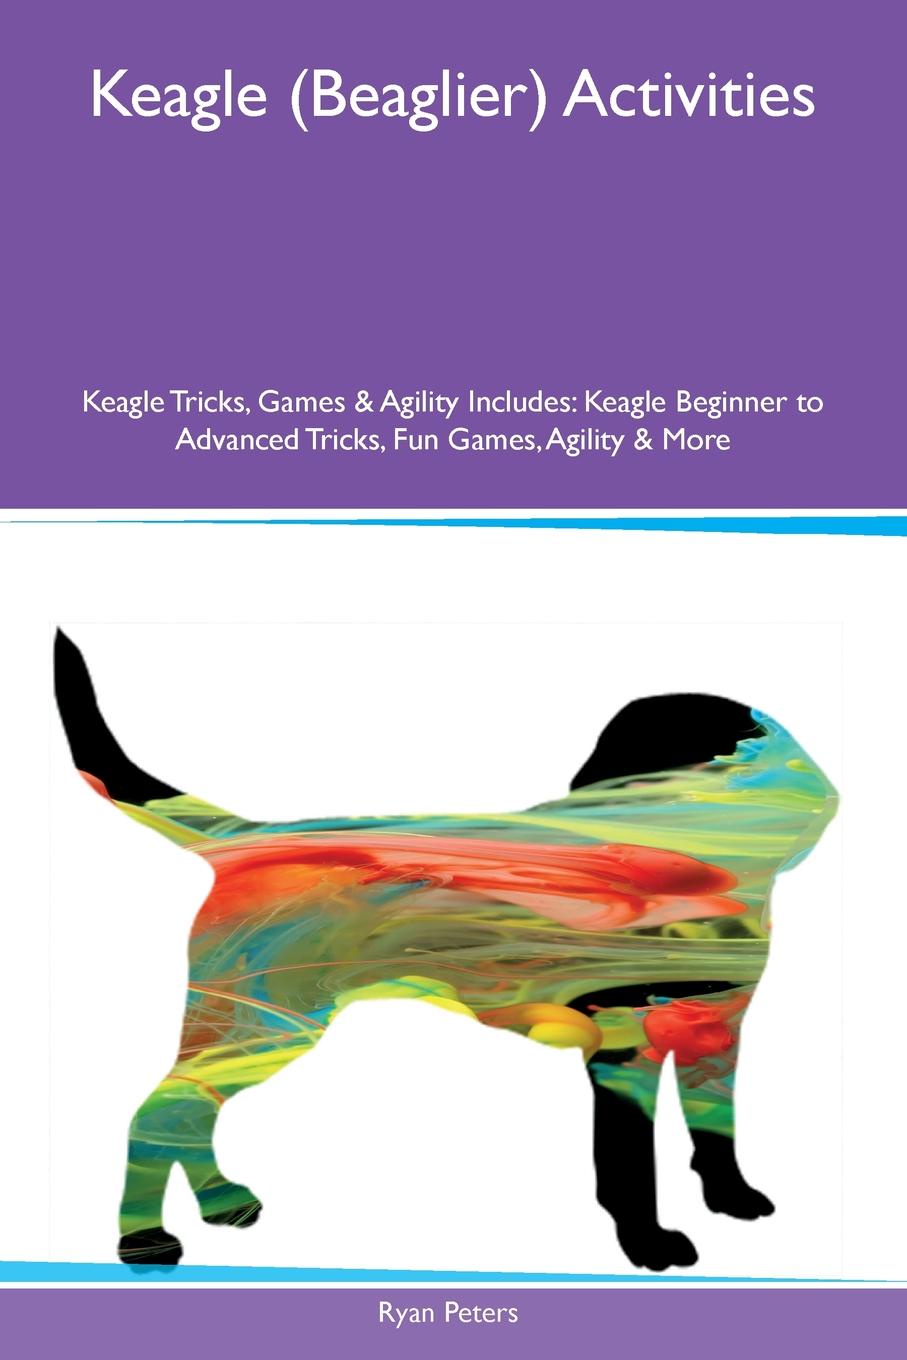 Keagle (Beaglier) Activities Keagle Tricks, Games & Agility Includes. Keagle Beginner to Advanced Tricks, Fun Games, Agility & More